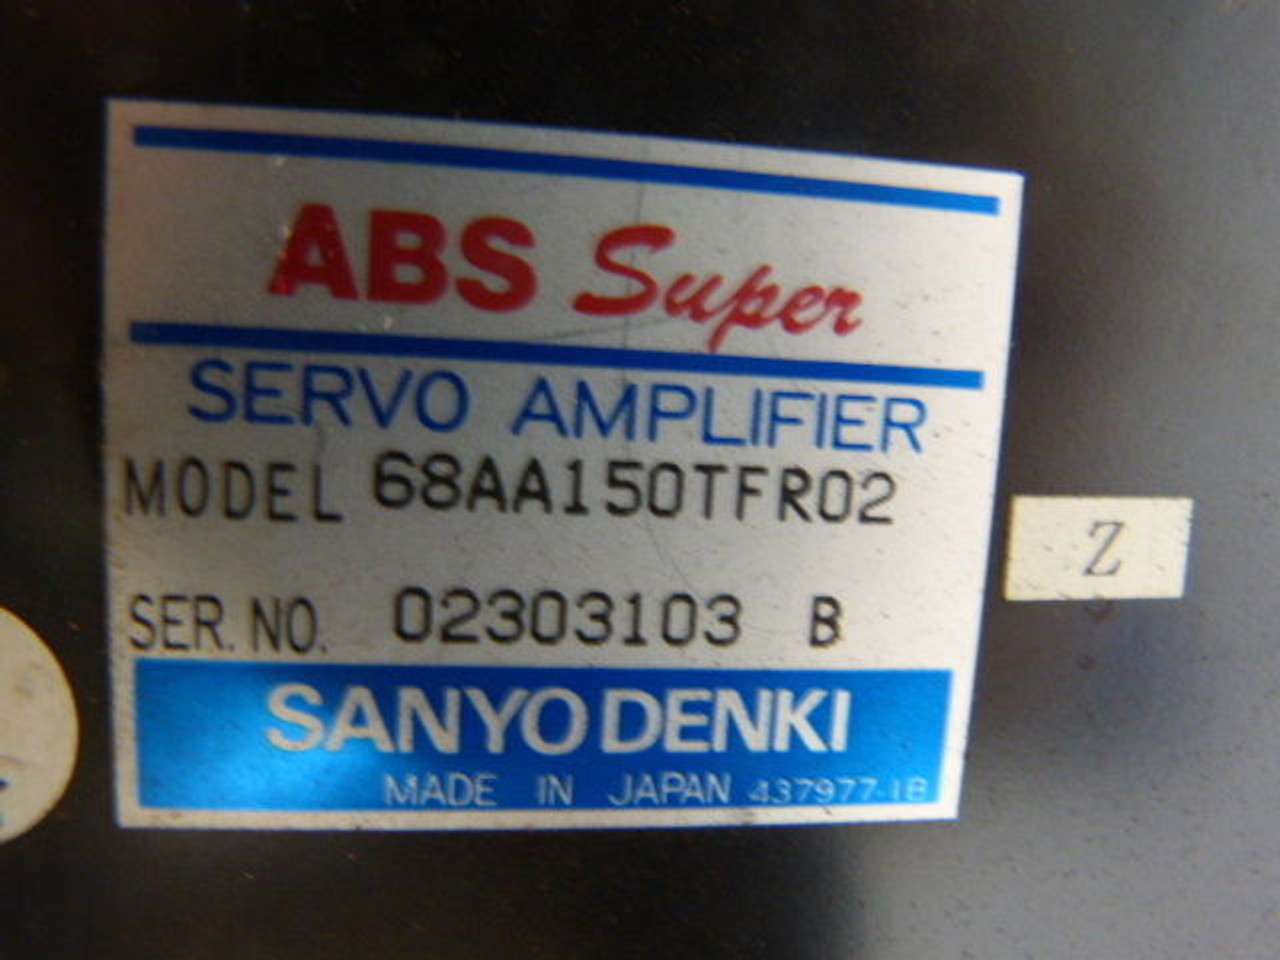 Sanyo Denki 68AA150TFR02 ABS Super Servo Amplifier USED